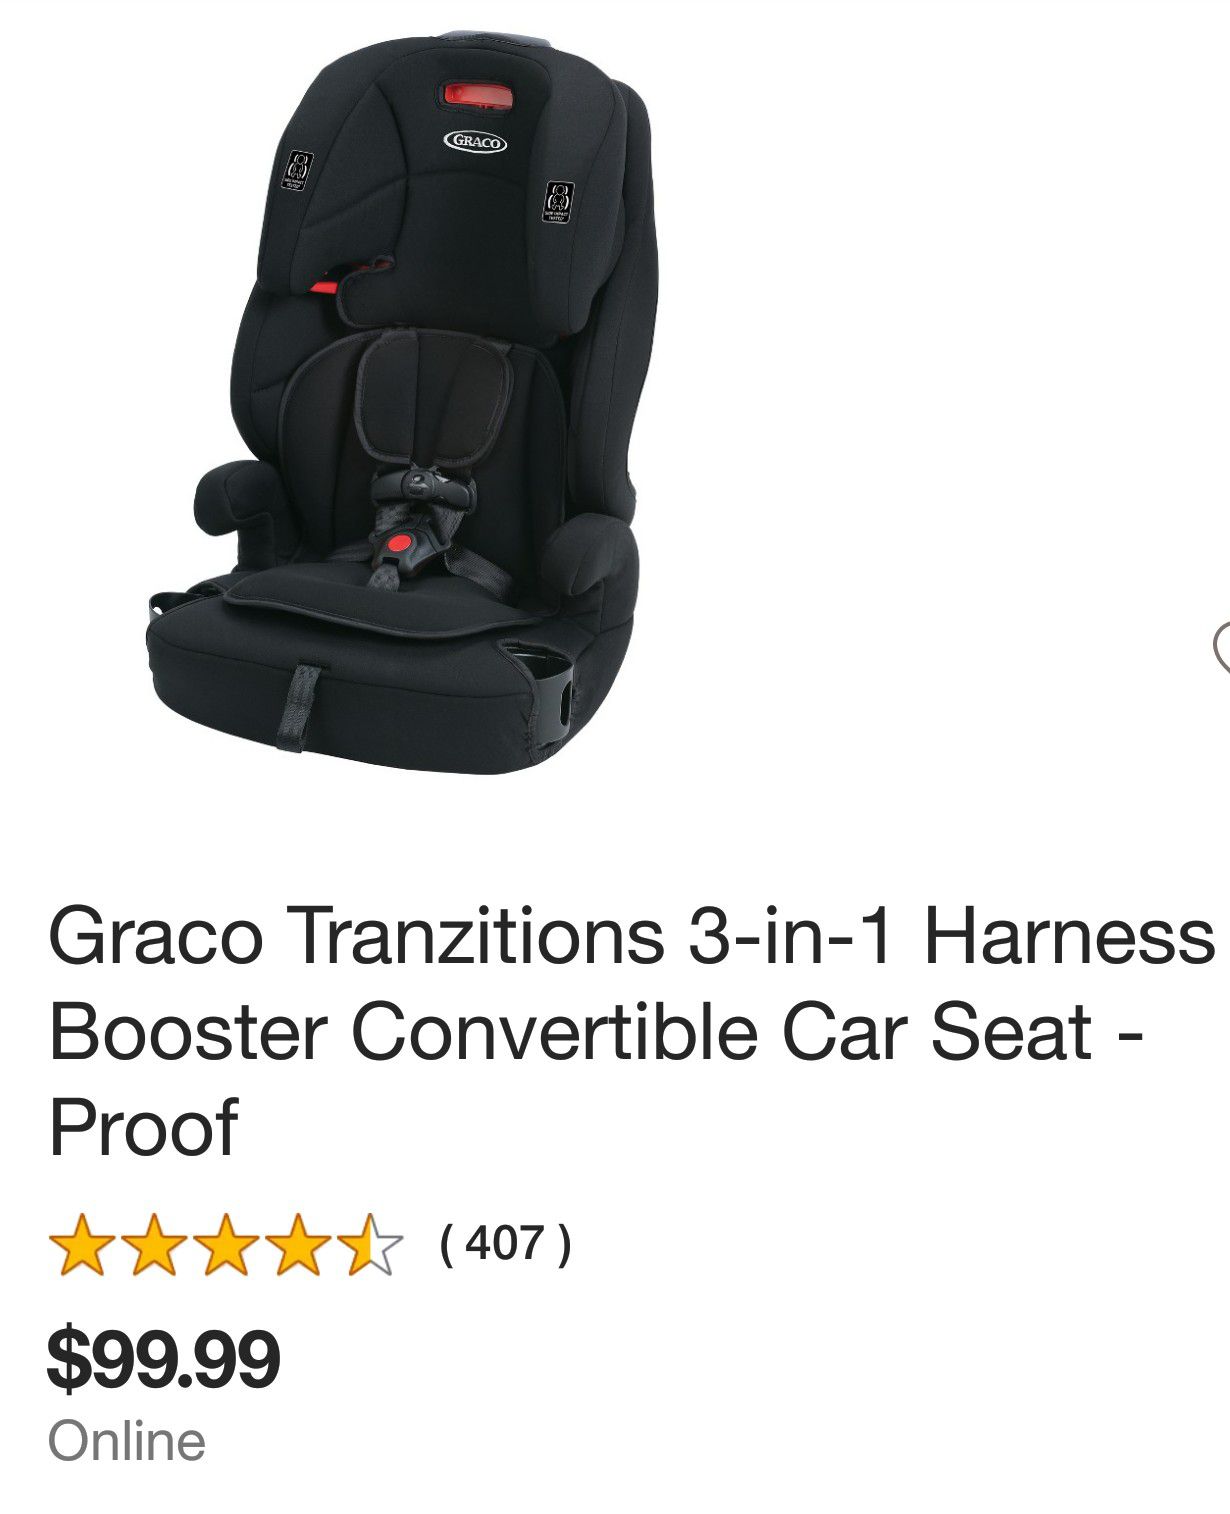 Graco Tranzitions 3in1 Car Seat